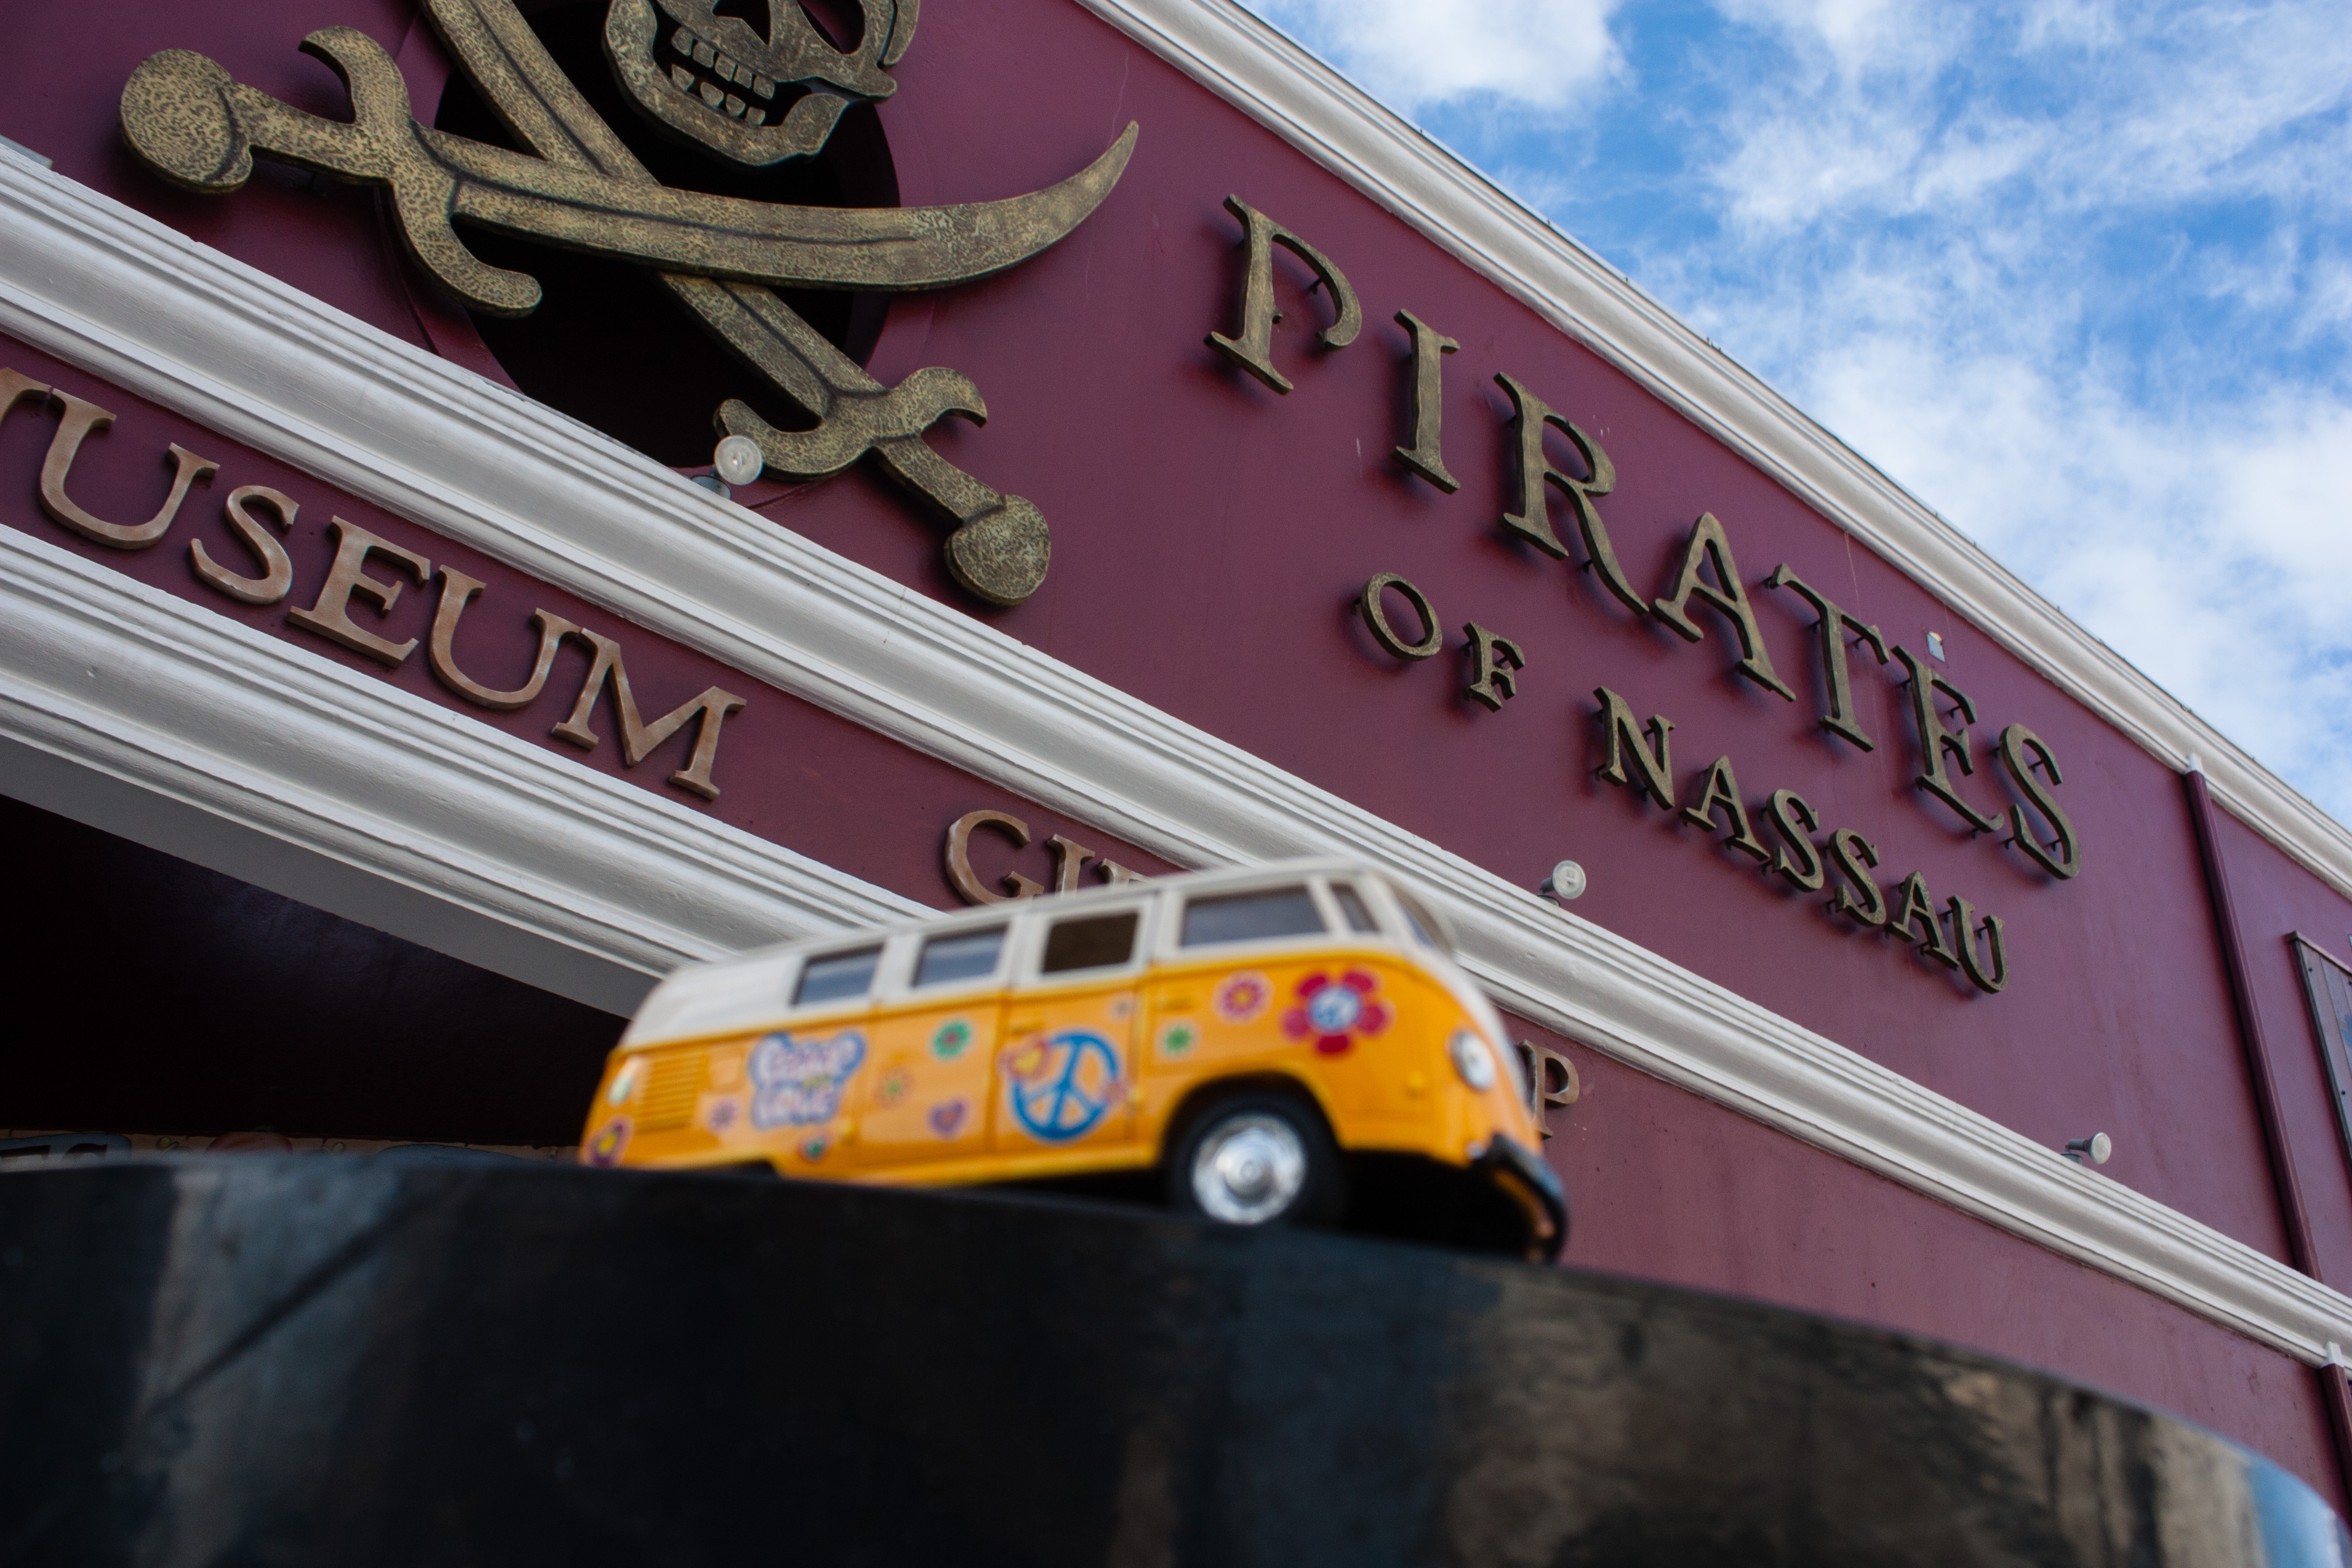 The yellow van at the pirates of Nassau Museum